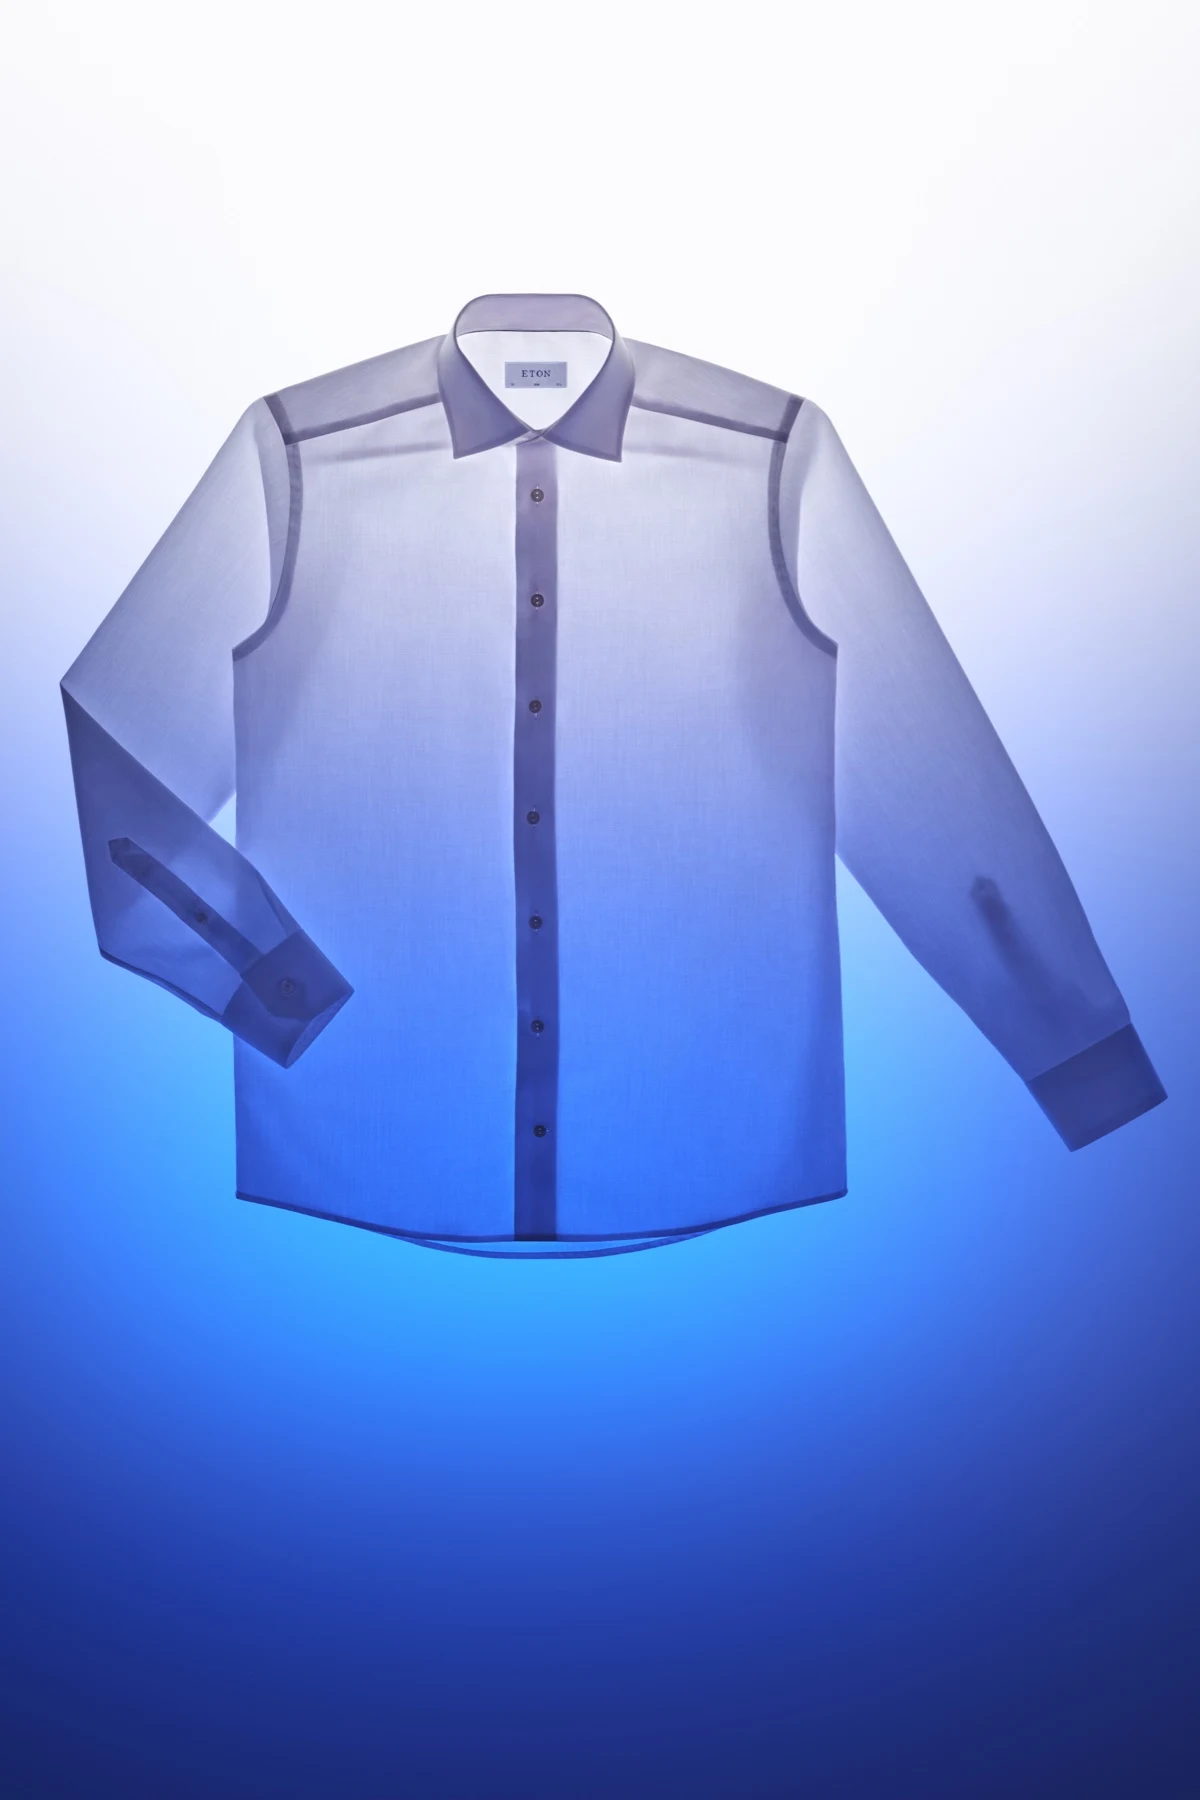 A Blueprint image of a white shirt